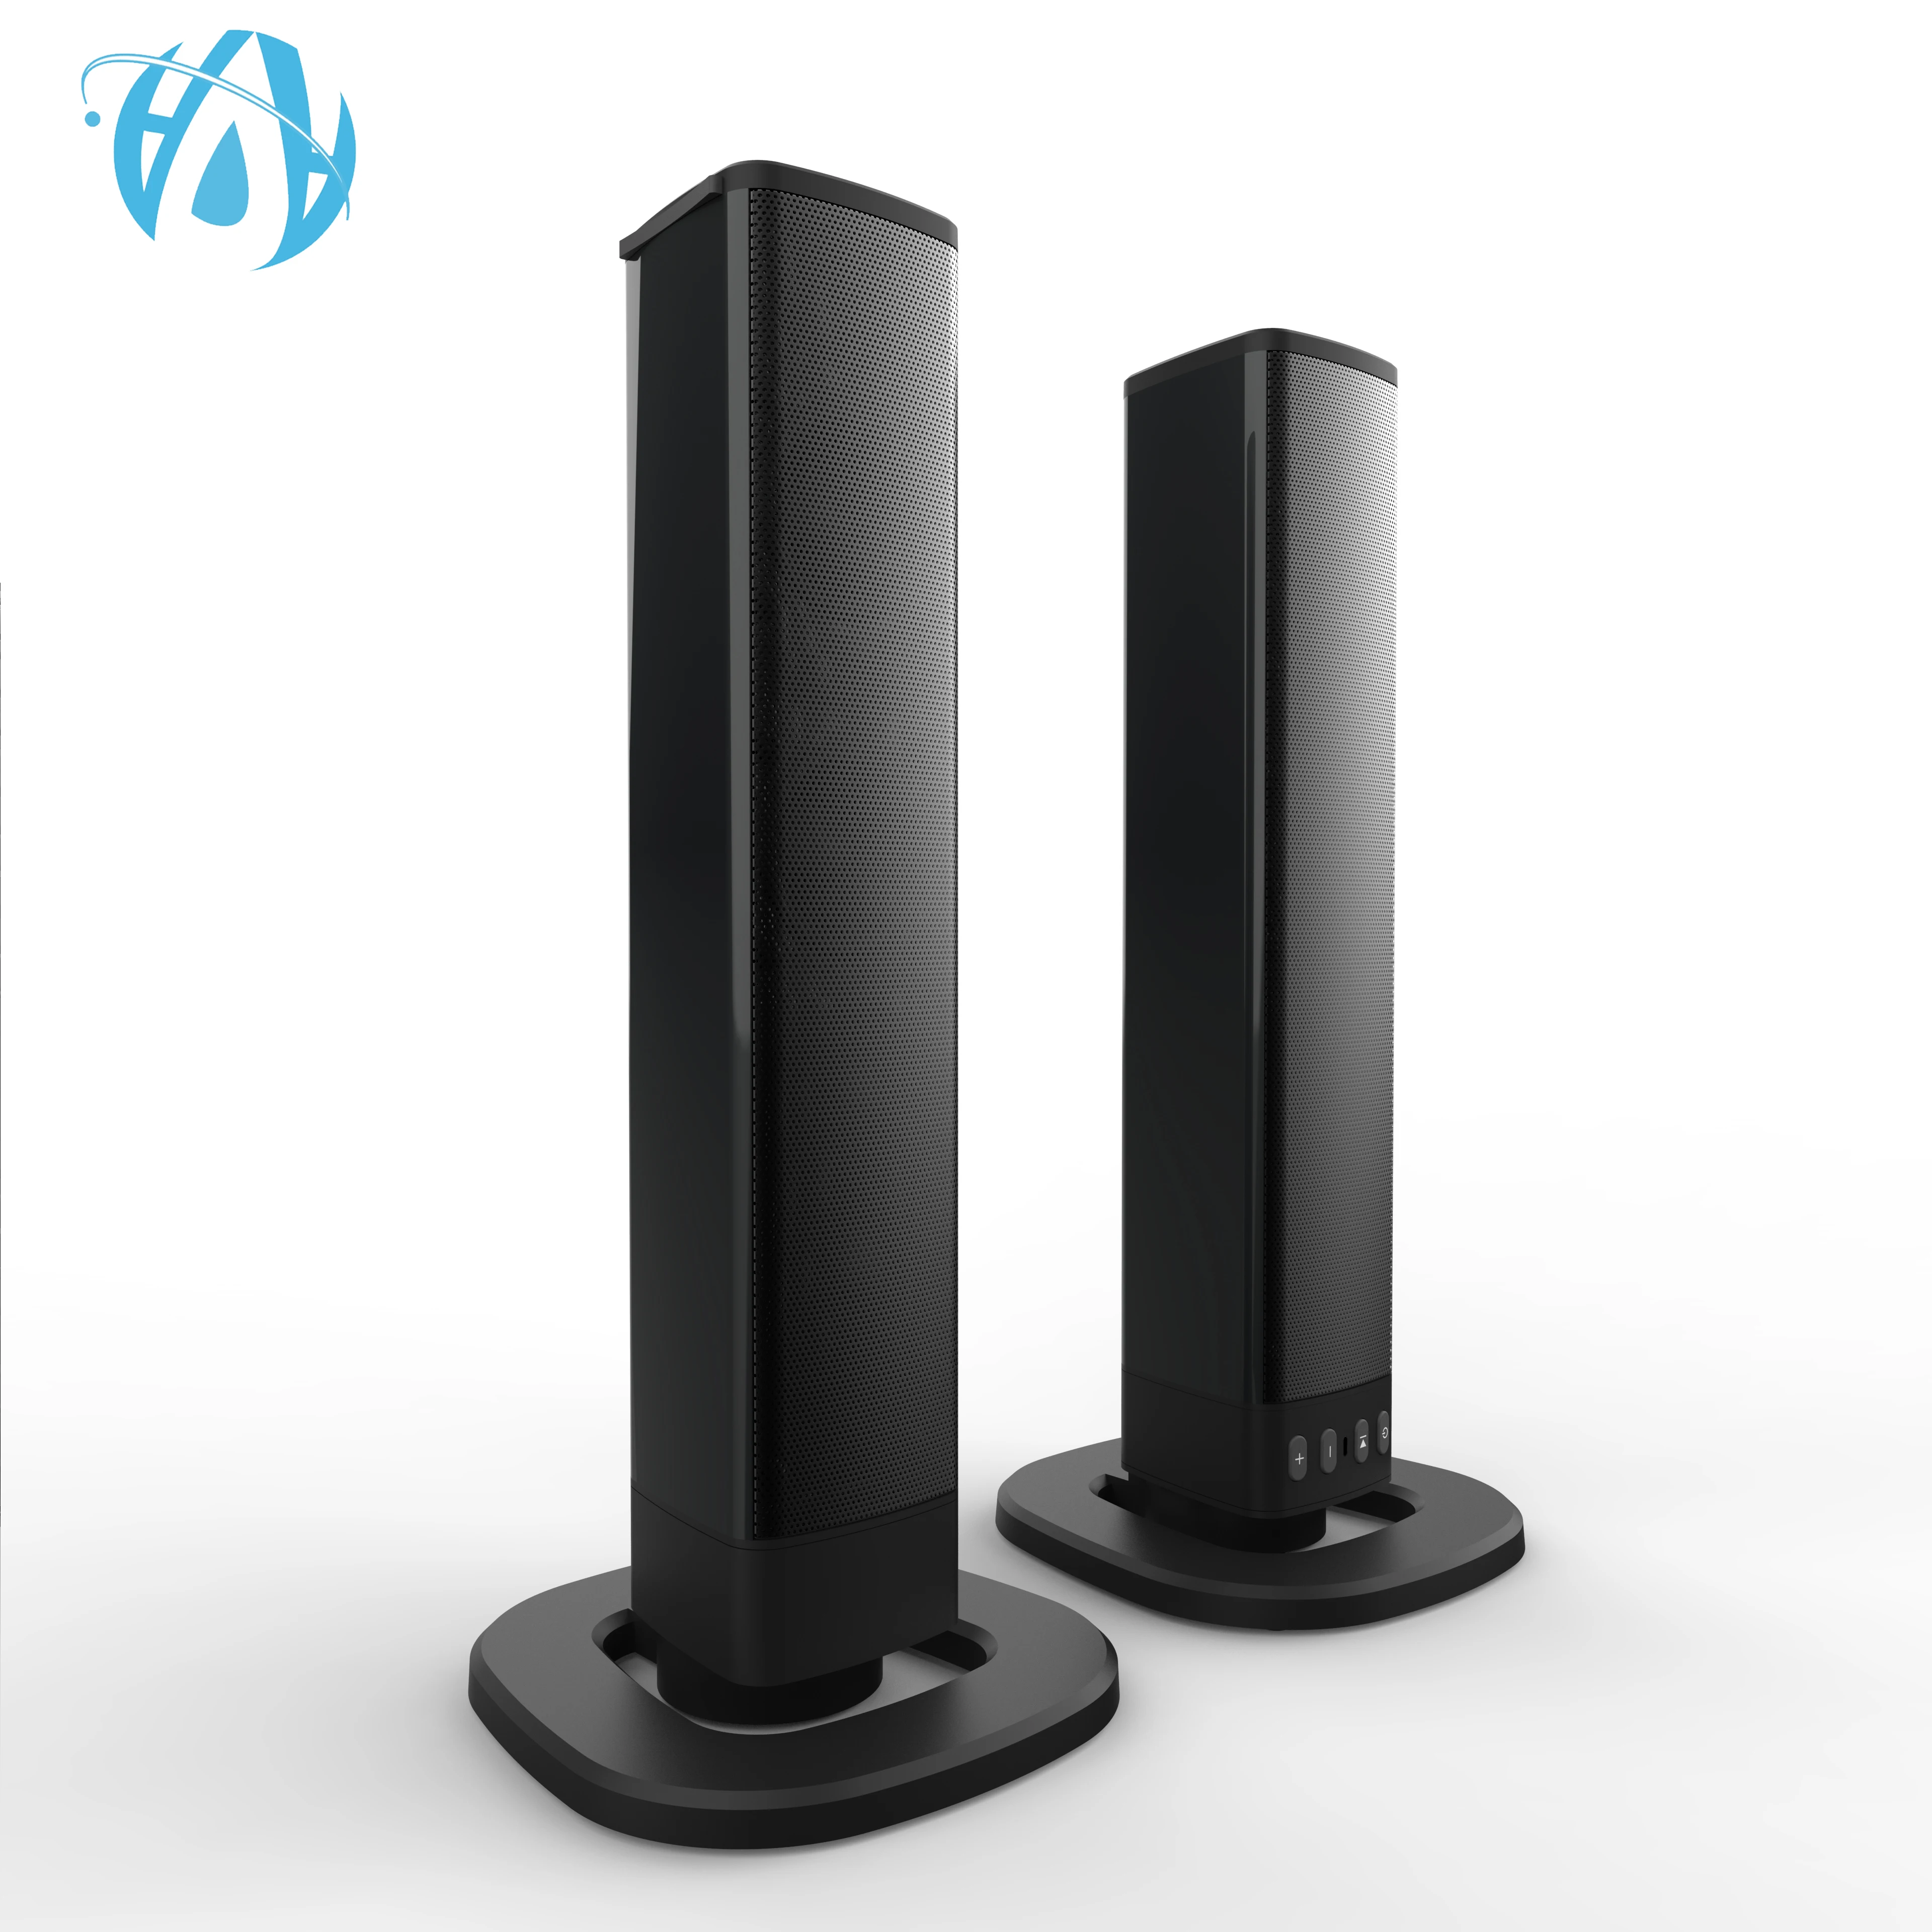 

Best Detachable Home Sound bar with FM Radio Audio Surround Stereo Bass Powerful 20W Speakers Bluetooth Soundbar for TV